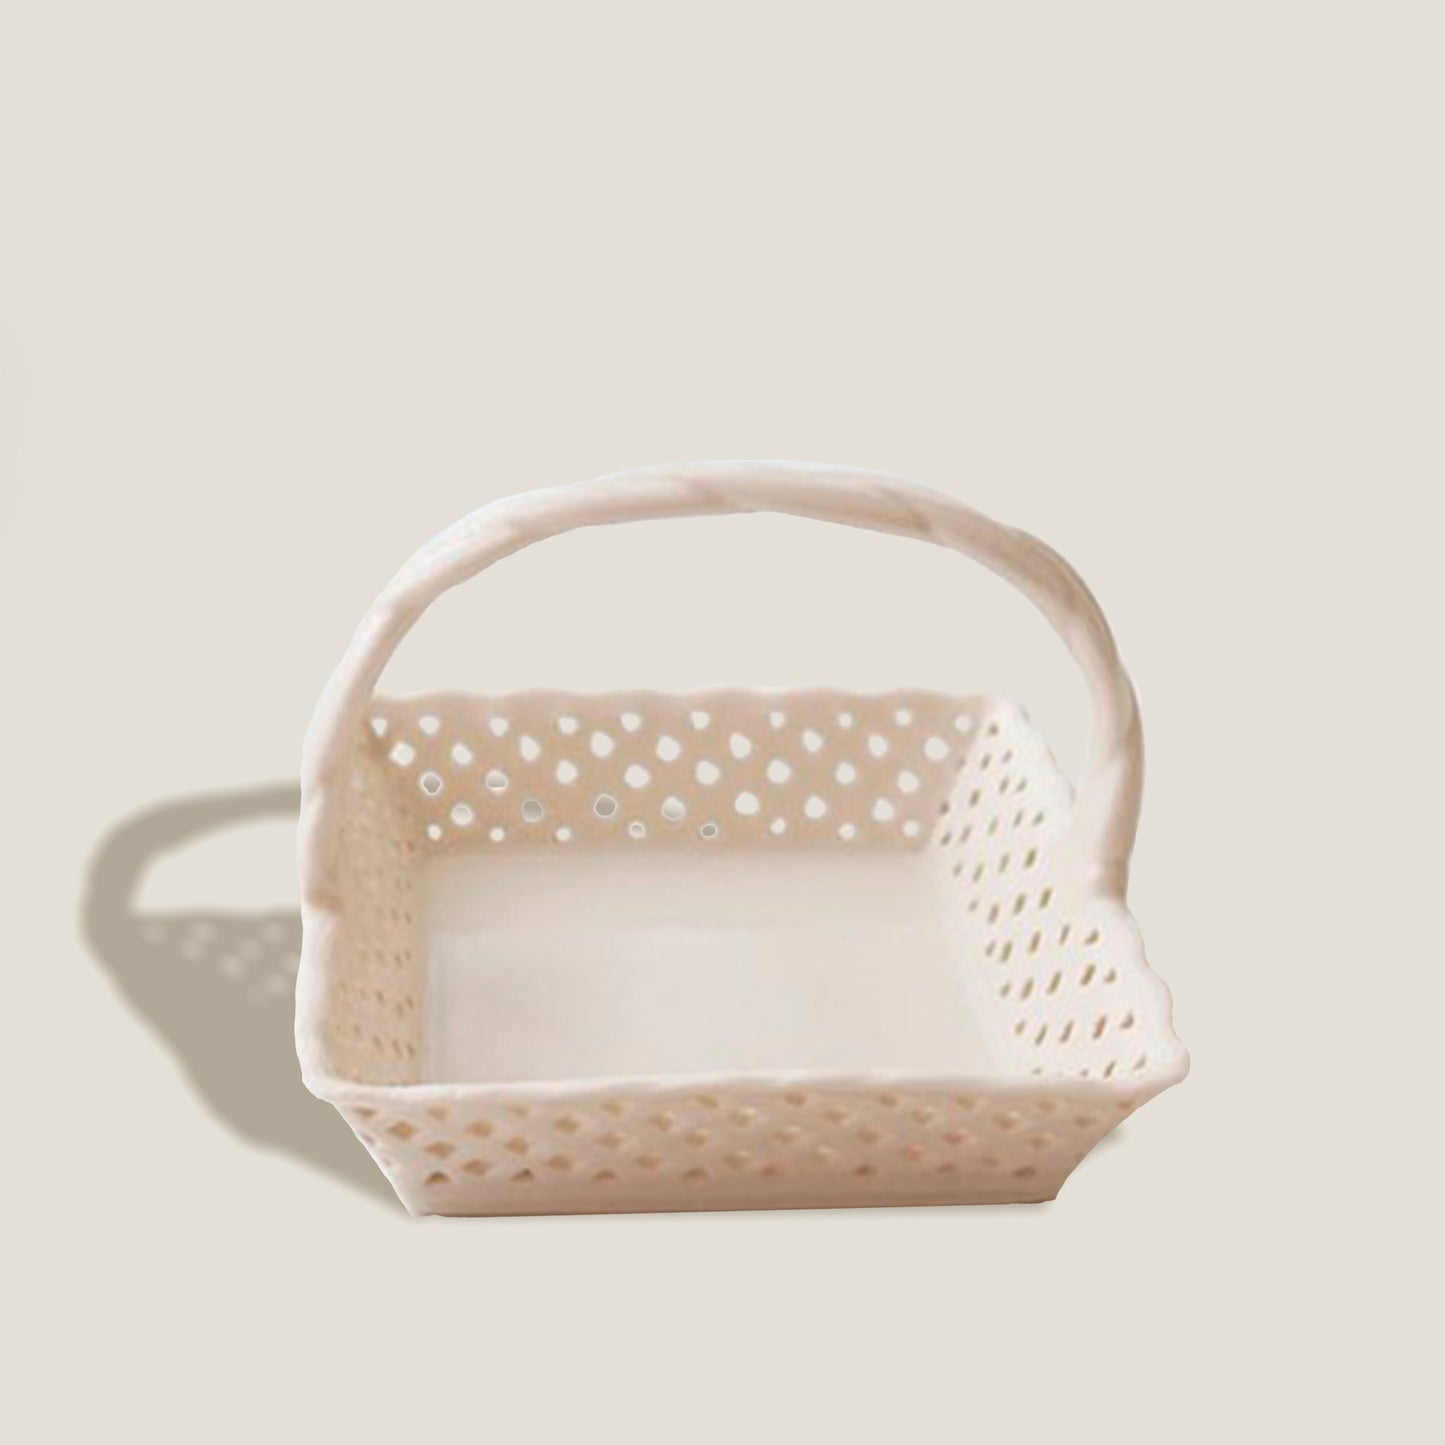 Hollow Ceramic Basket